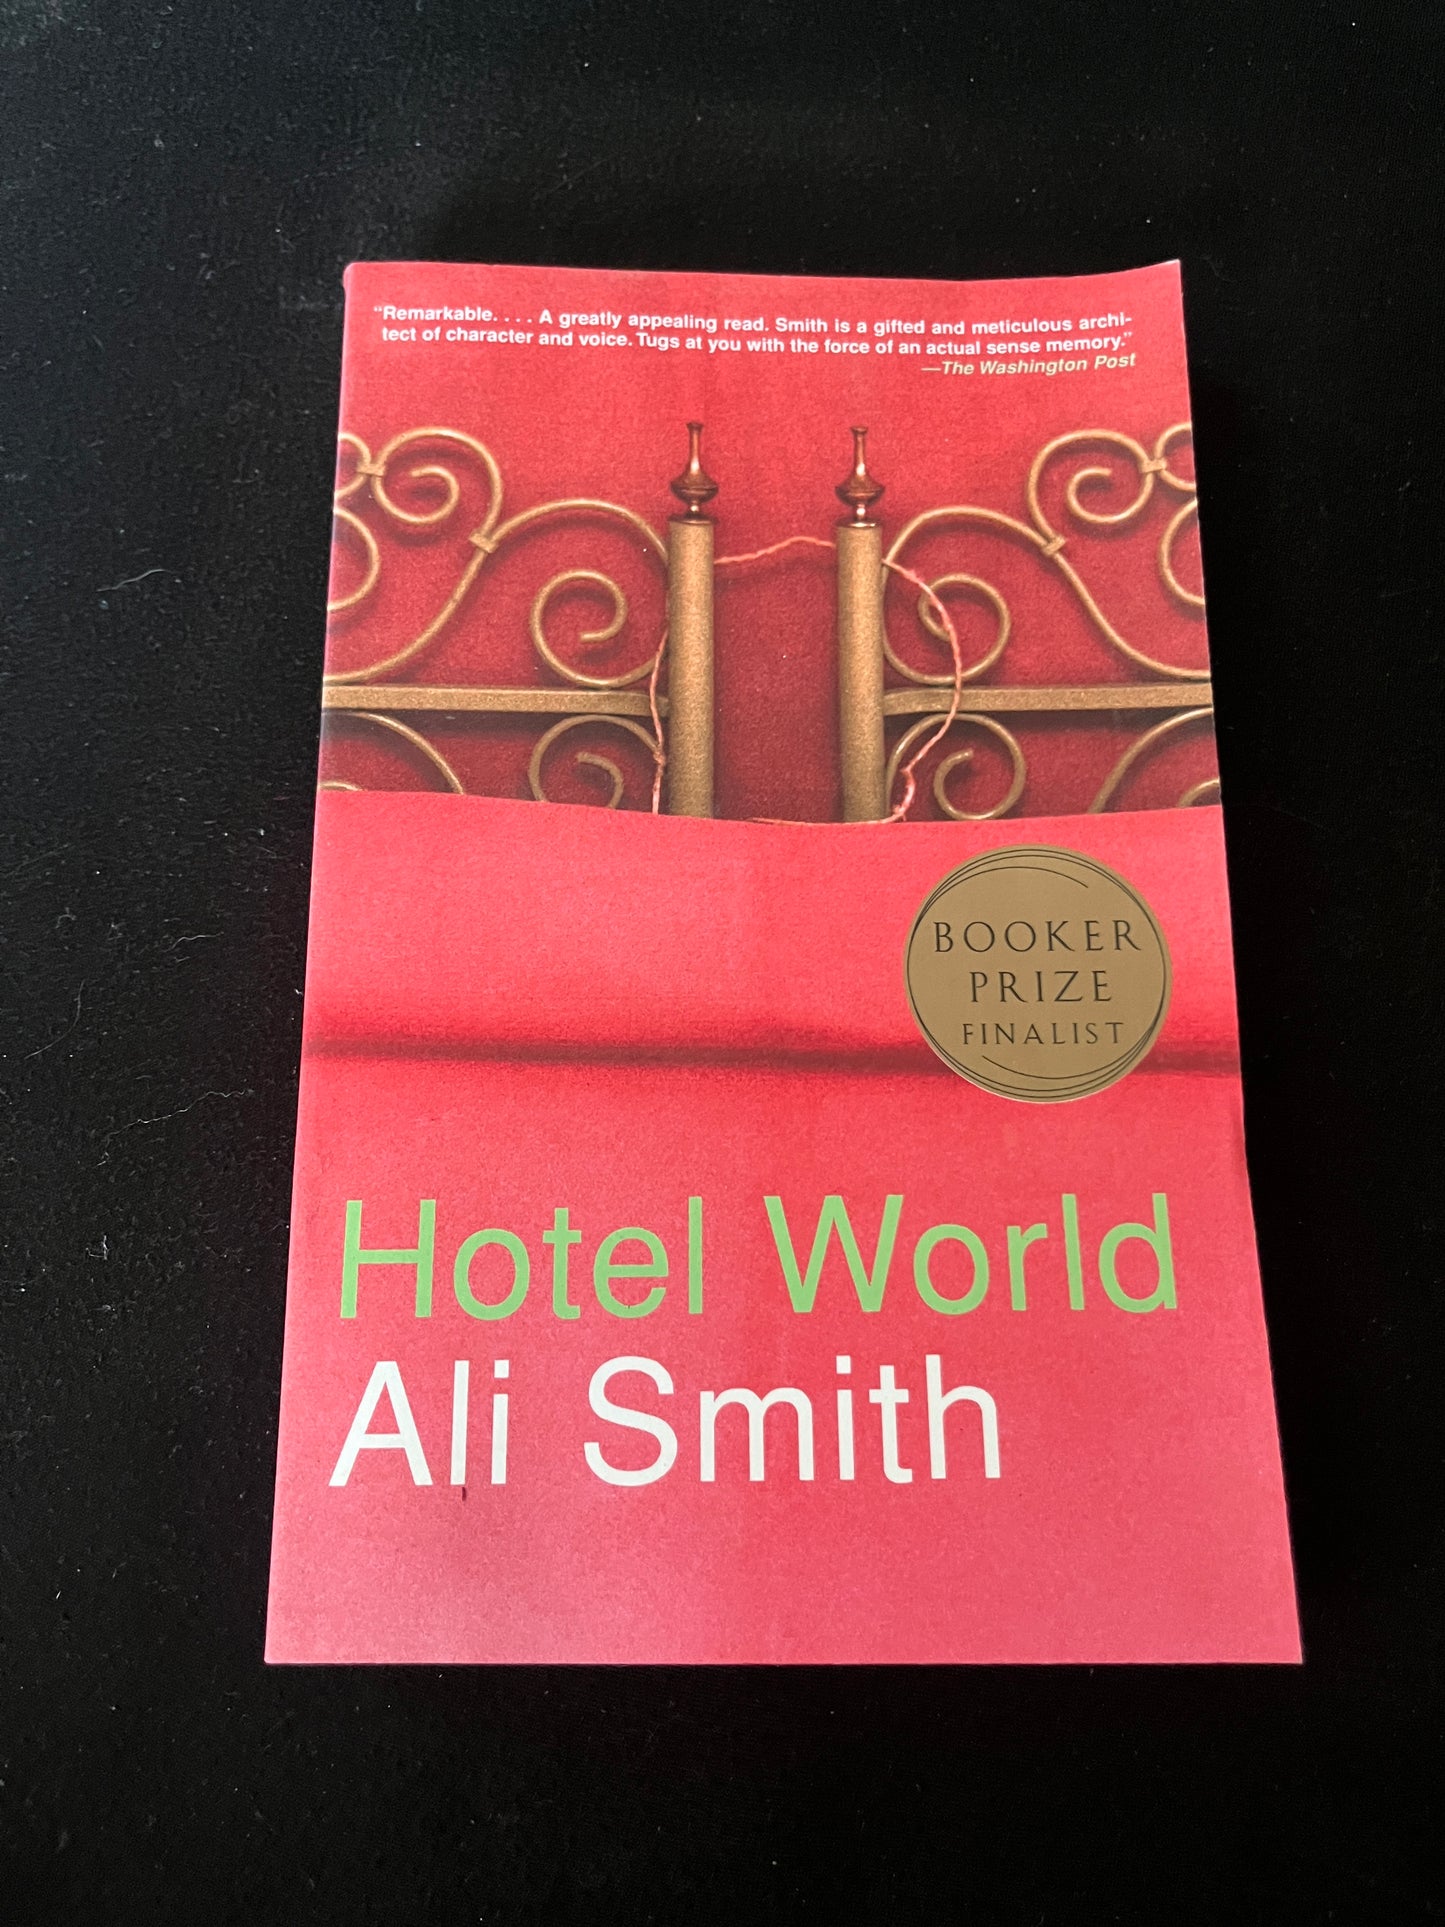 HOTEL WORLD by Ali Smith